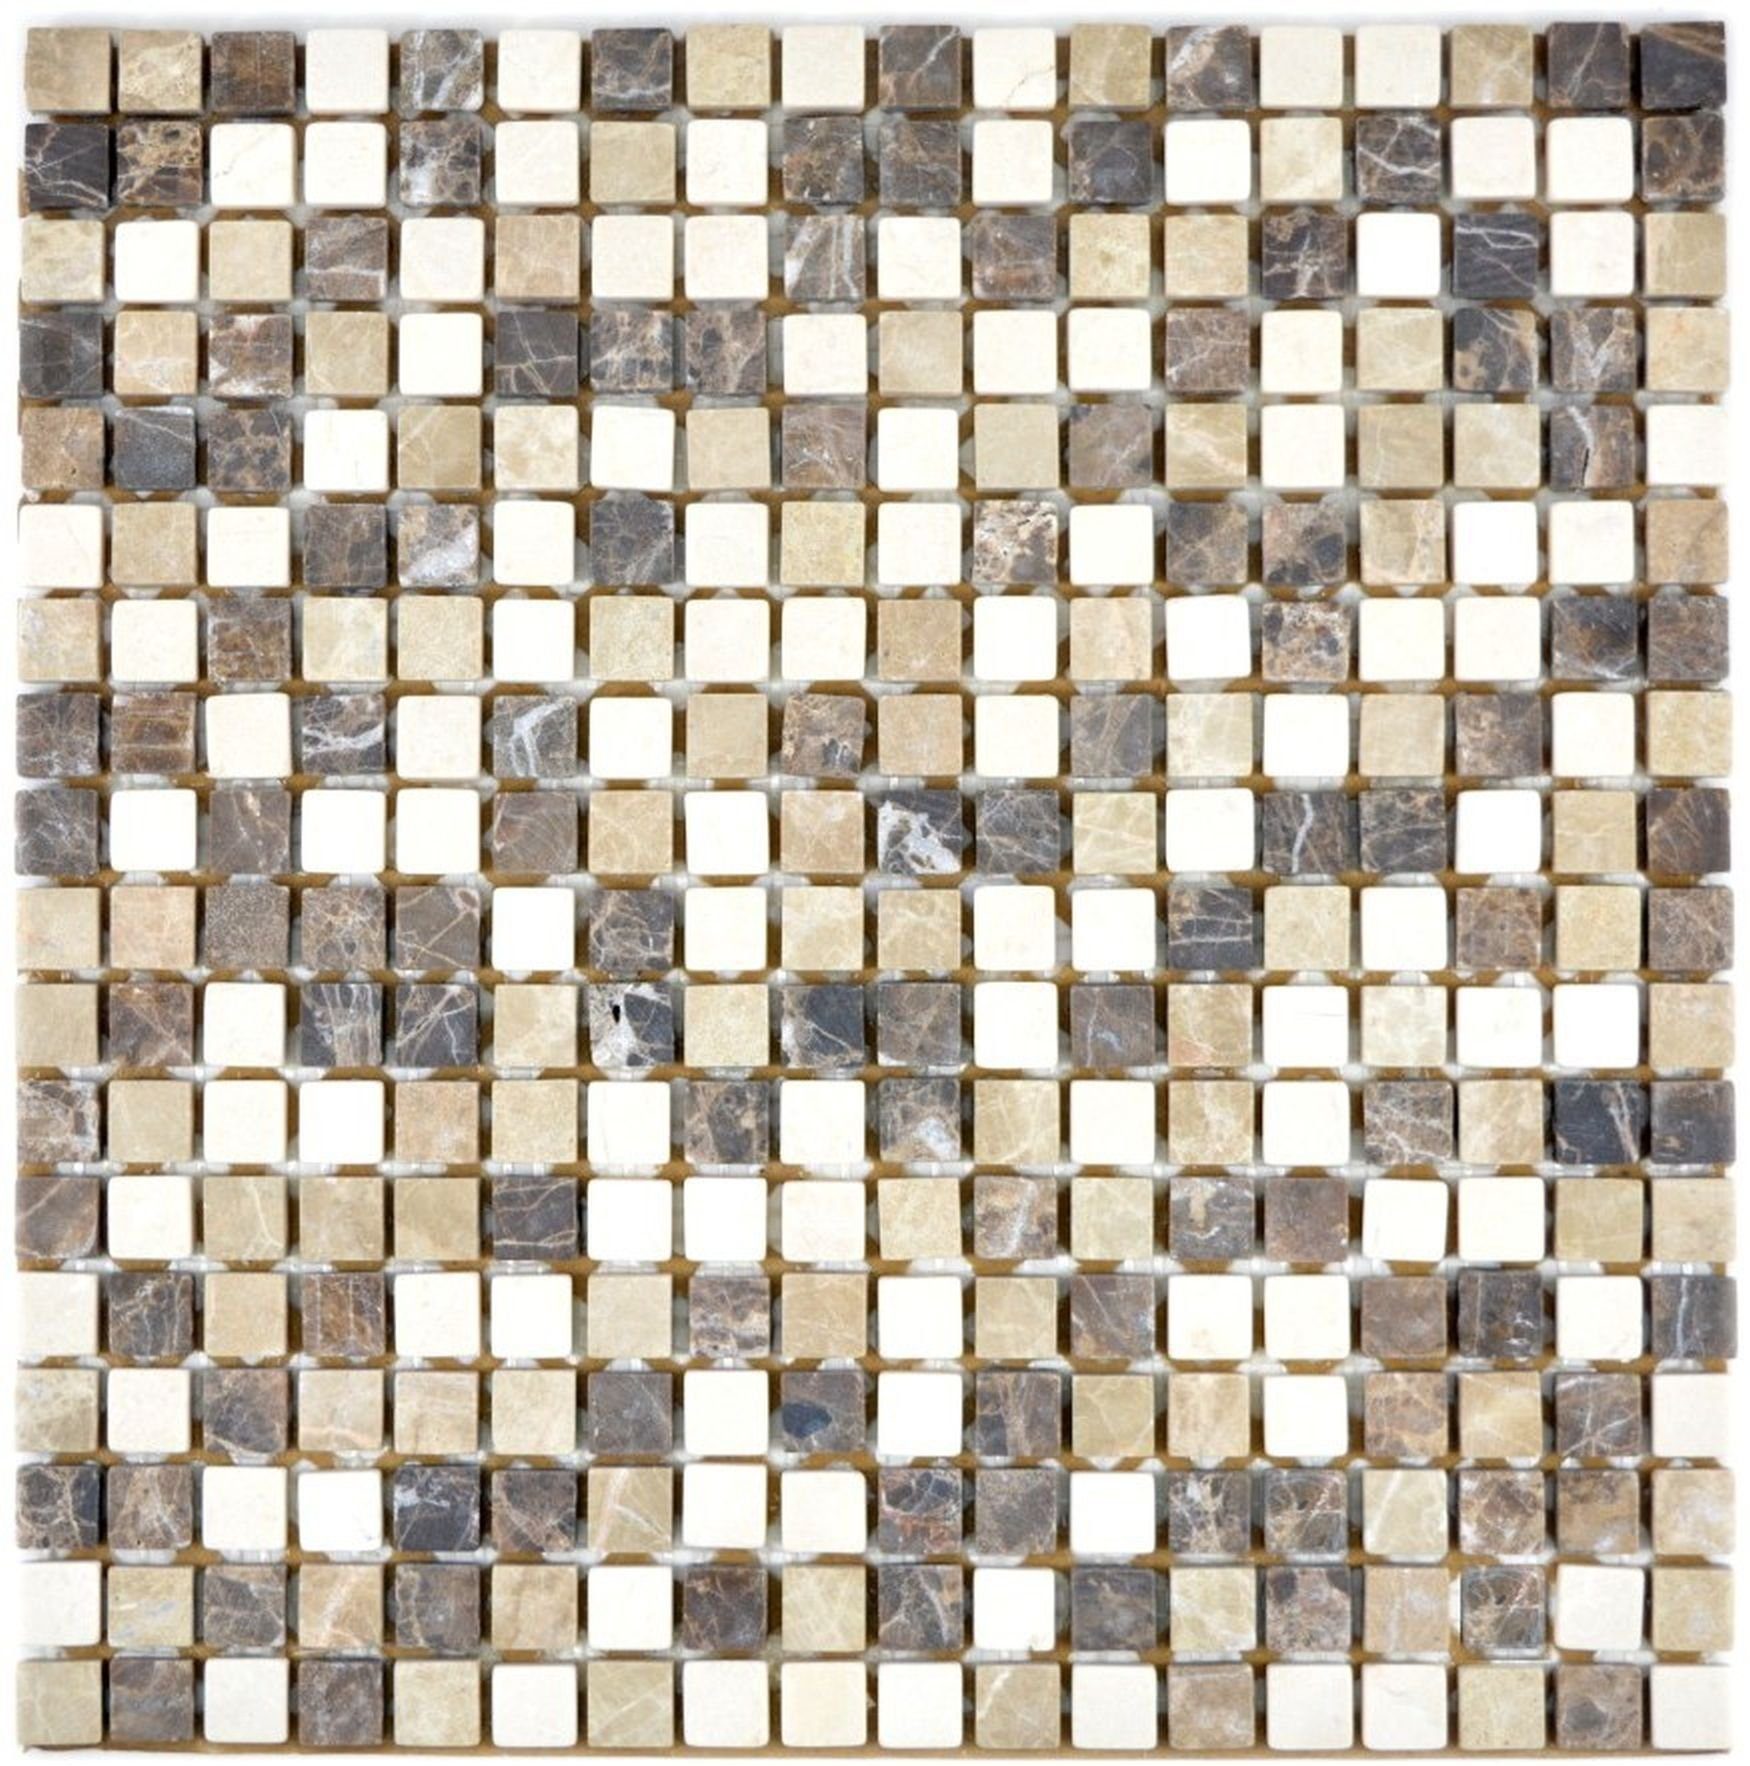 Mosani Bodenfliese Marmor Mosaik Fliese Naturstein creme beige braun Farbmix Quadrat